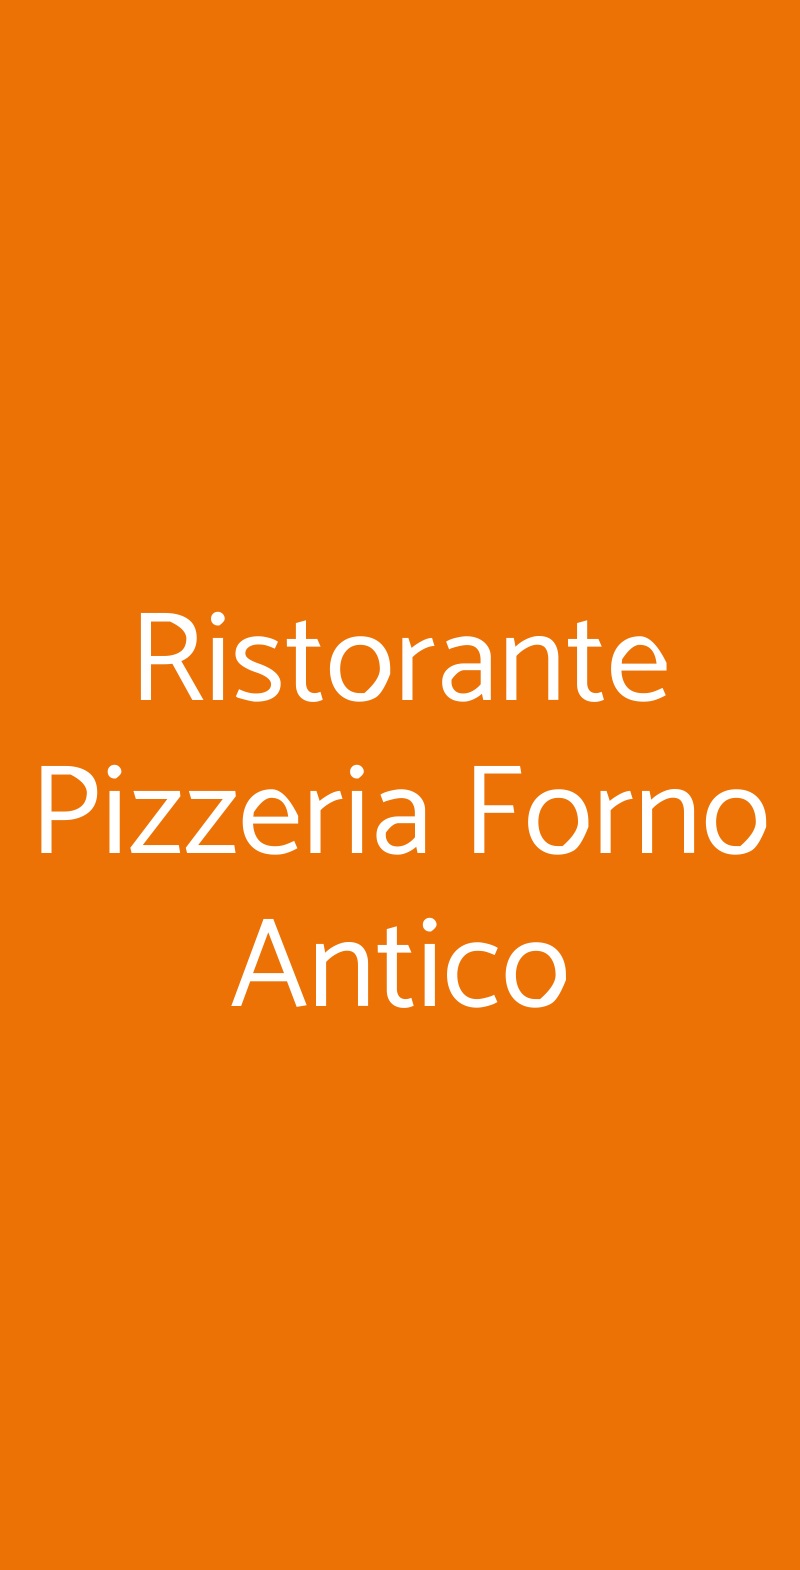 Ristorante Pizzeria Forno Antico Camerota menù 1 pagina